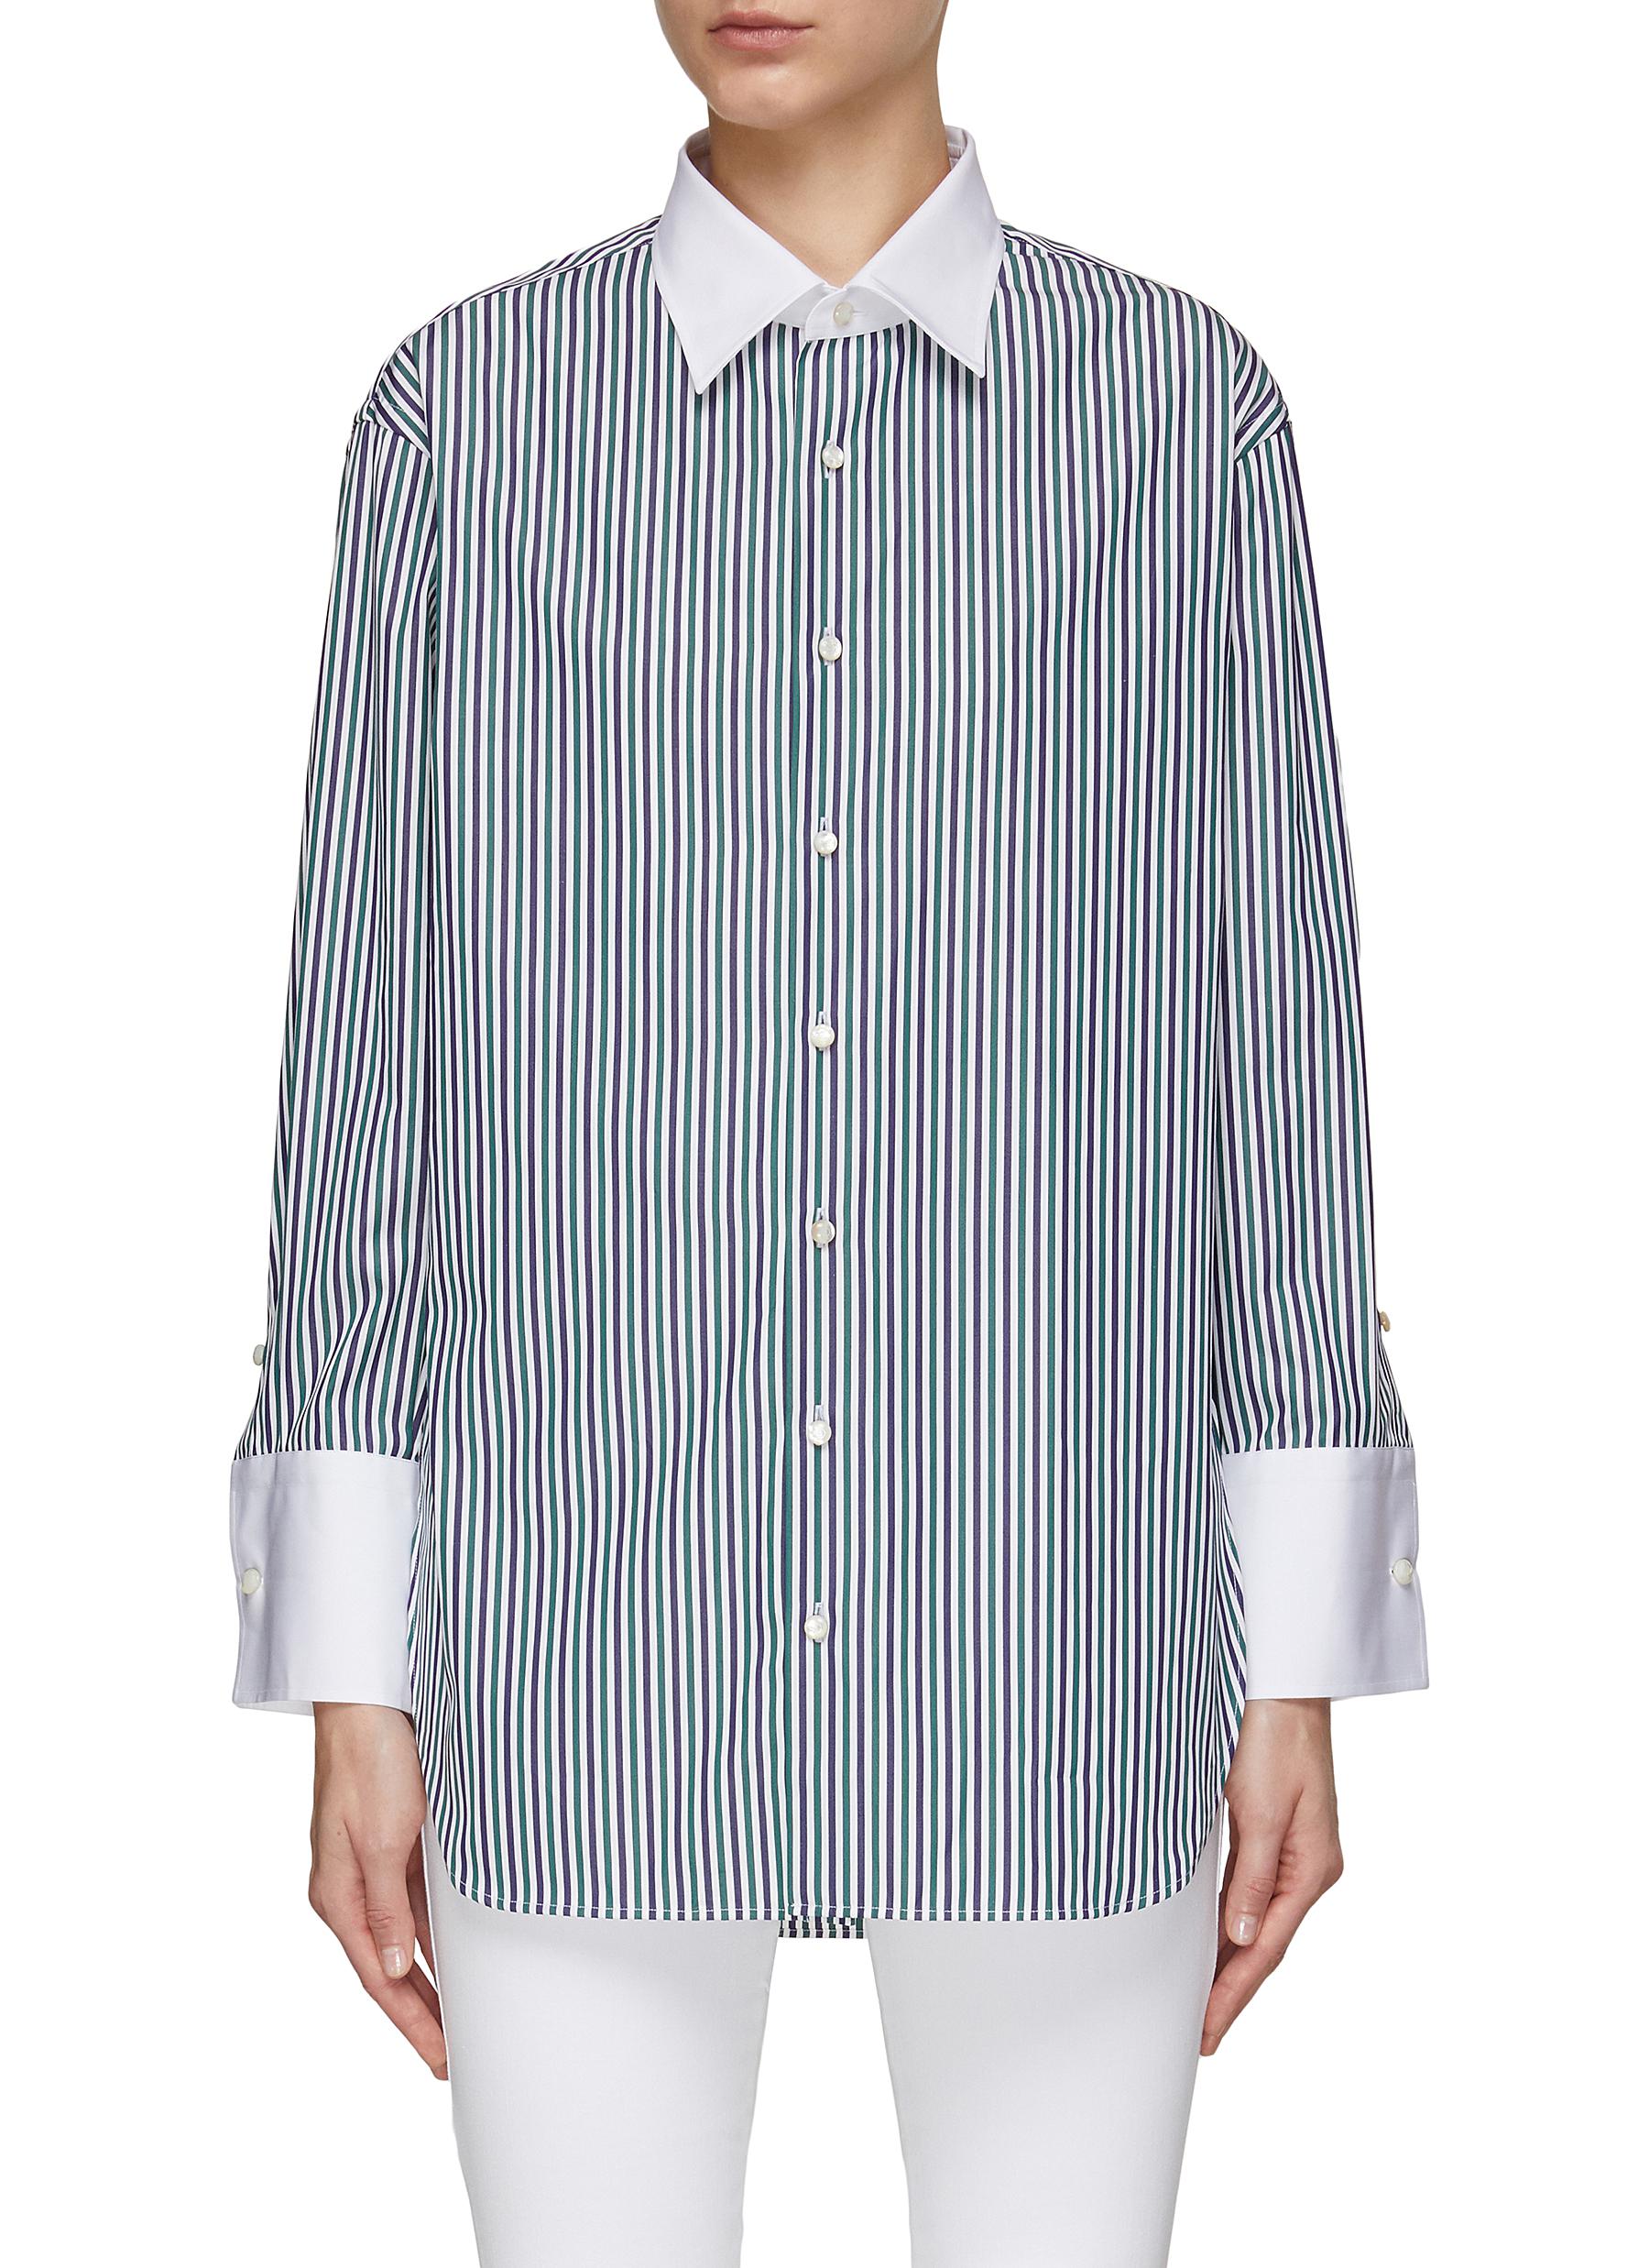 Margaux Striped Shirt